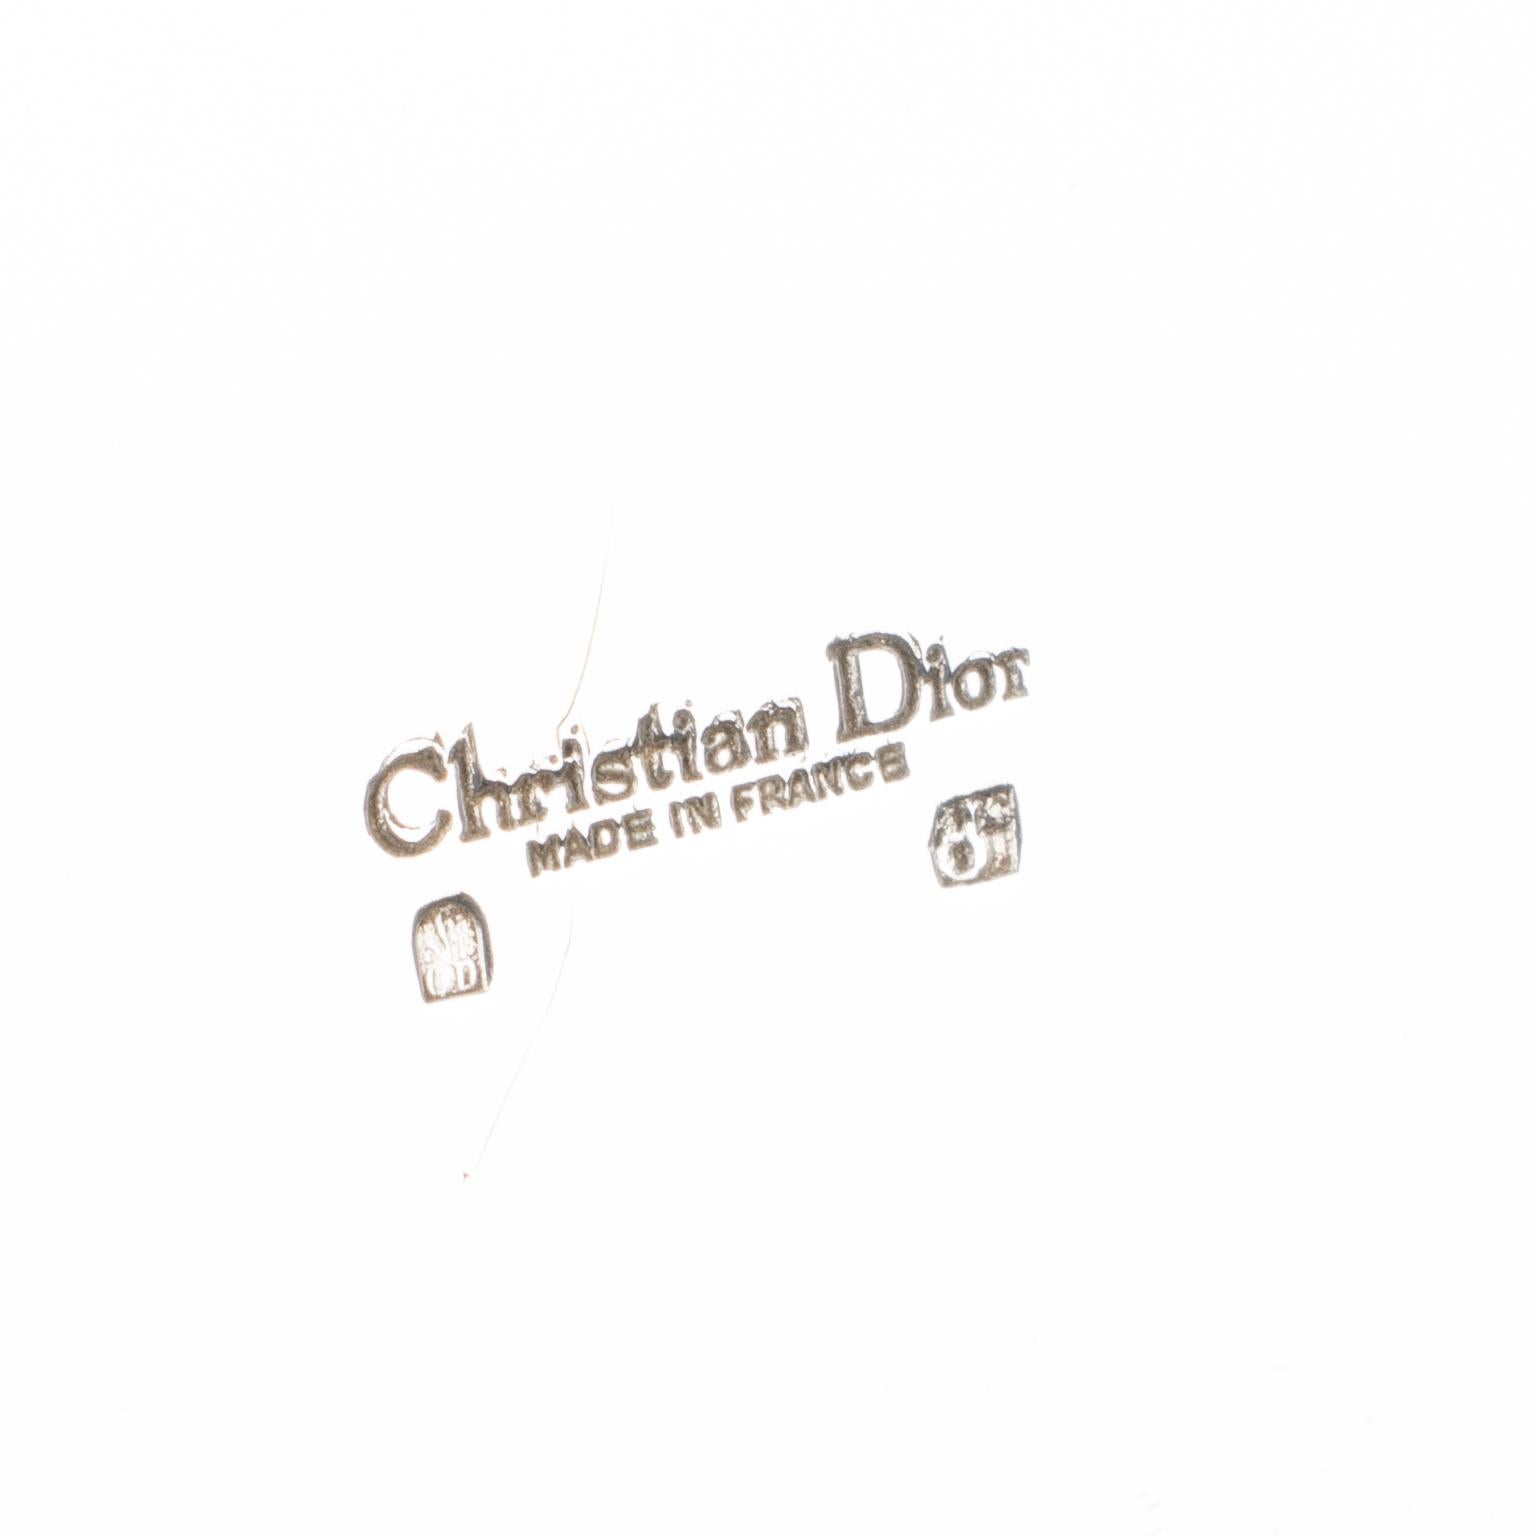 Christian Dior Paris Silver Plate Box with Quartz Stone Finial, 1970s For Sale 6